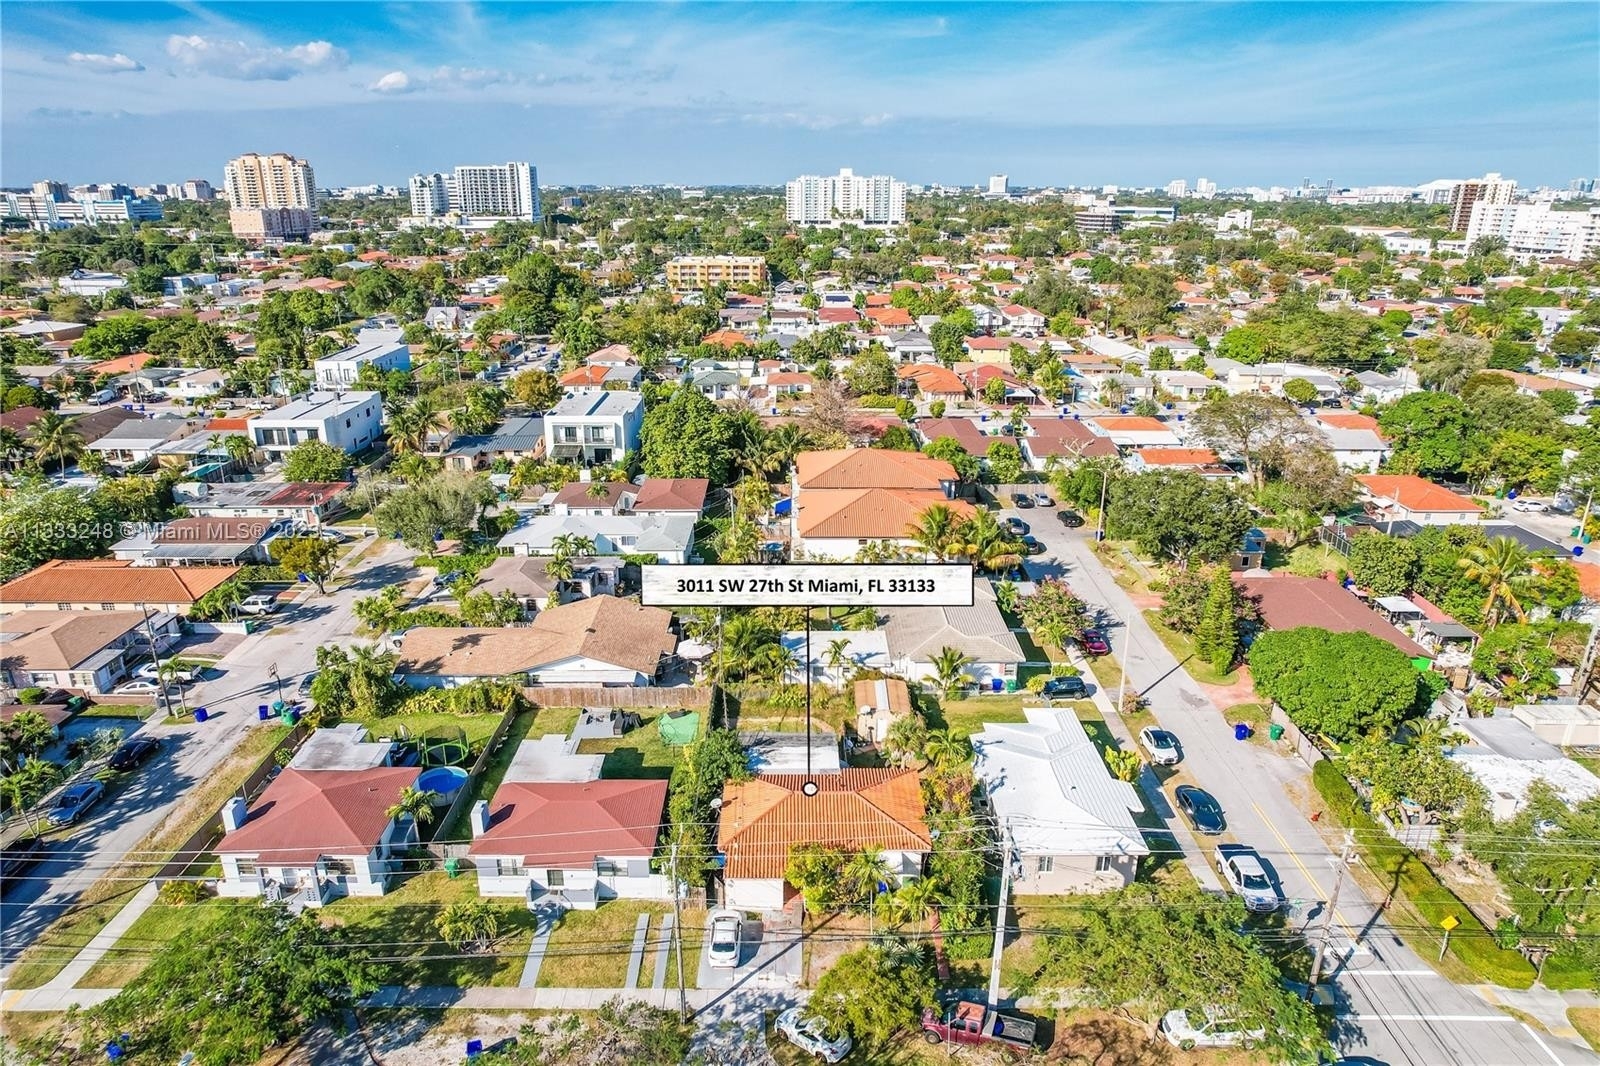 Property at South Bay Estates, Miami, FL 33133